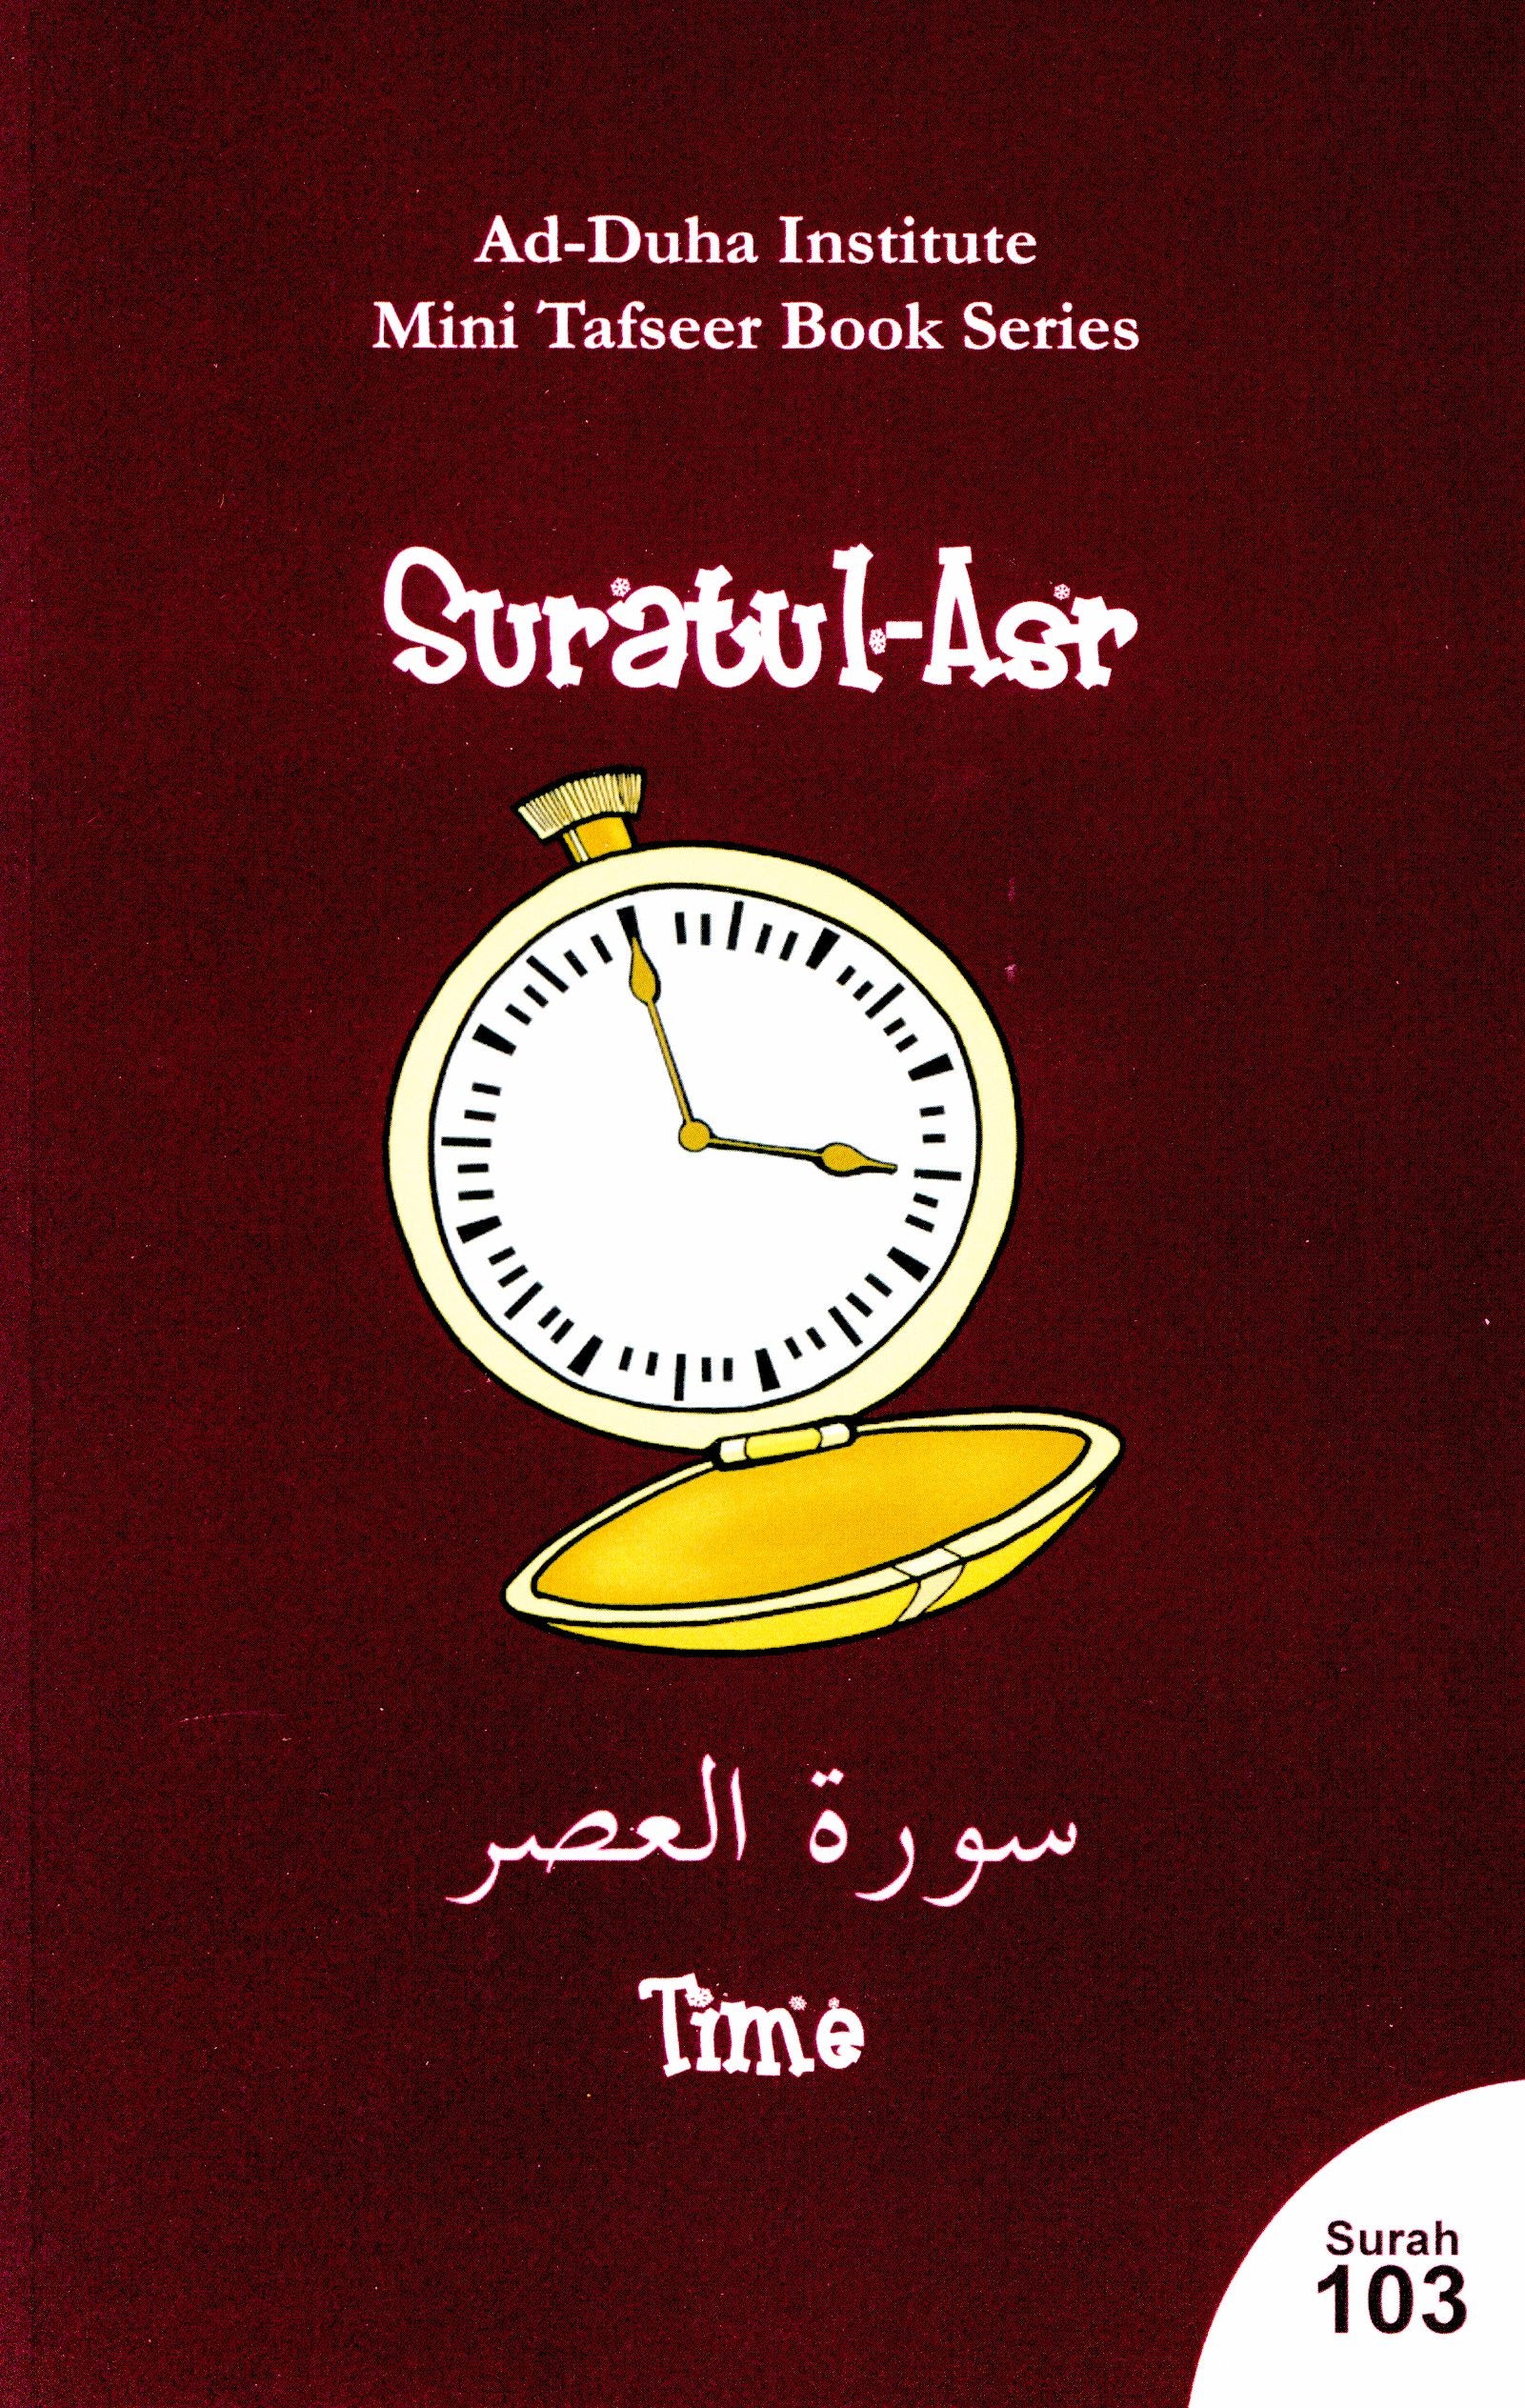 Mini Tafseer Book Suratul 'Asr (Surah 103)